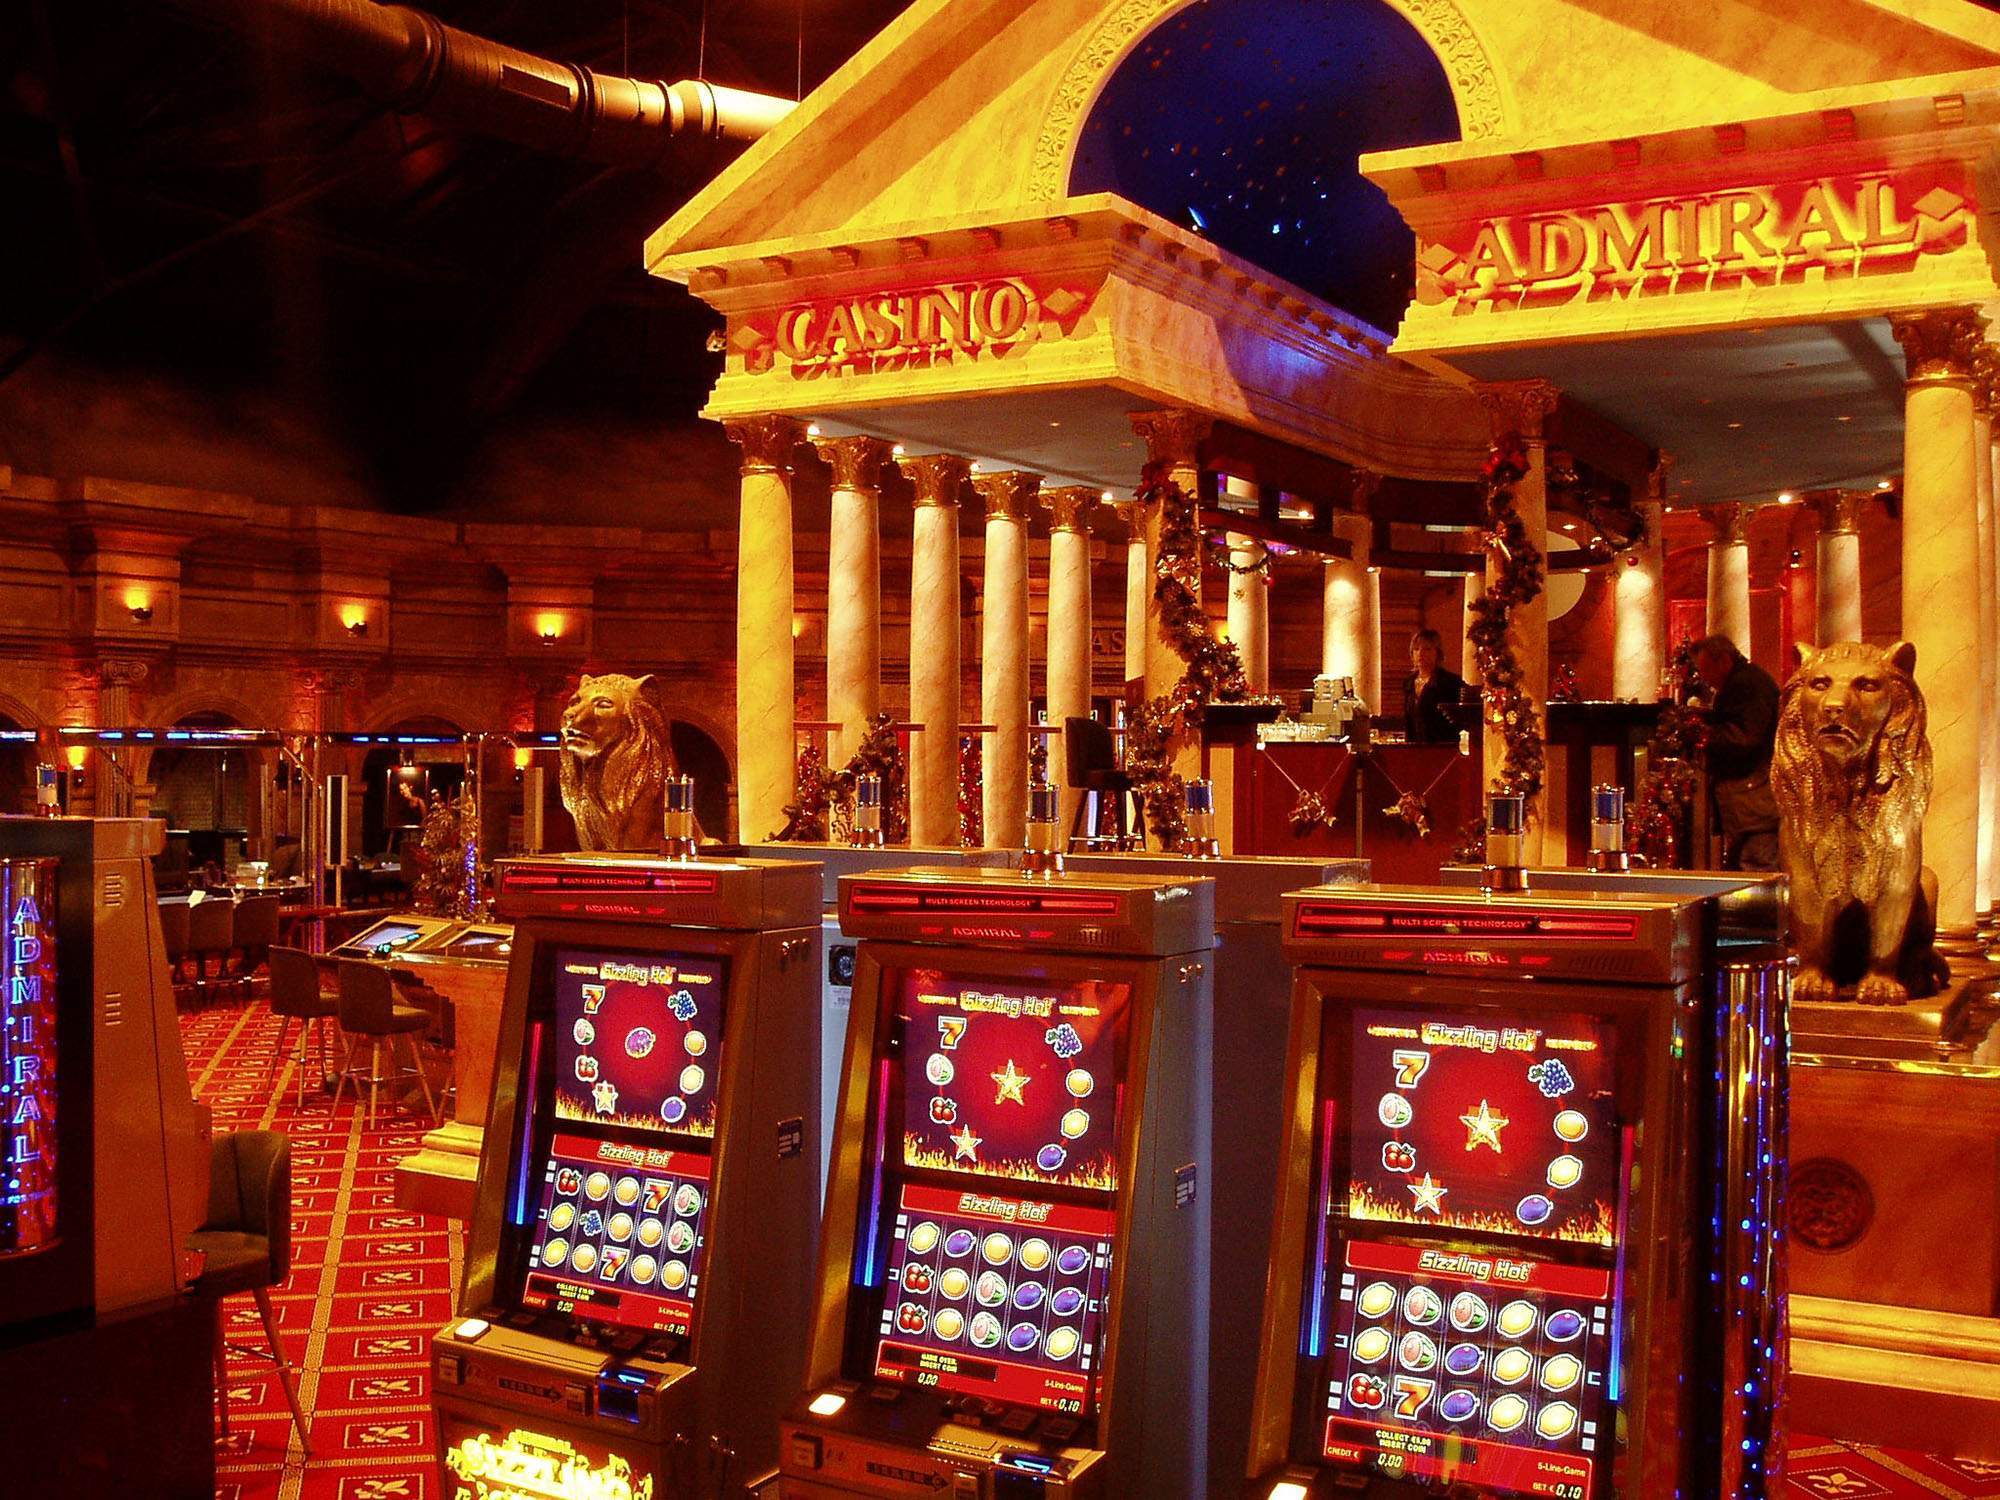 pay n play casino